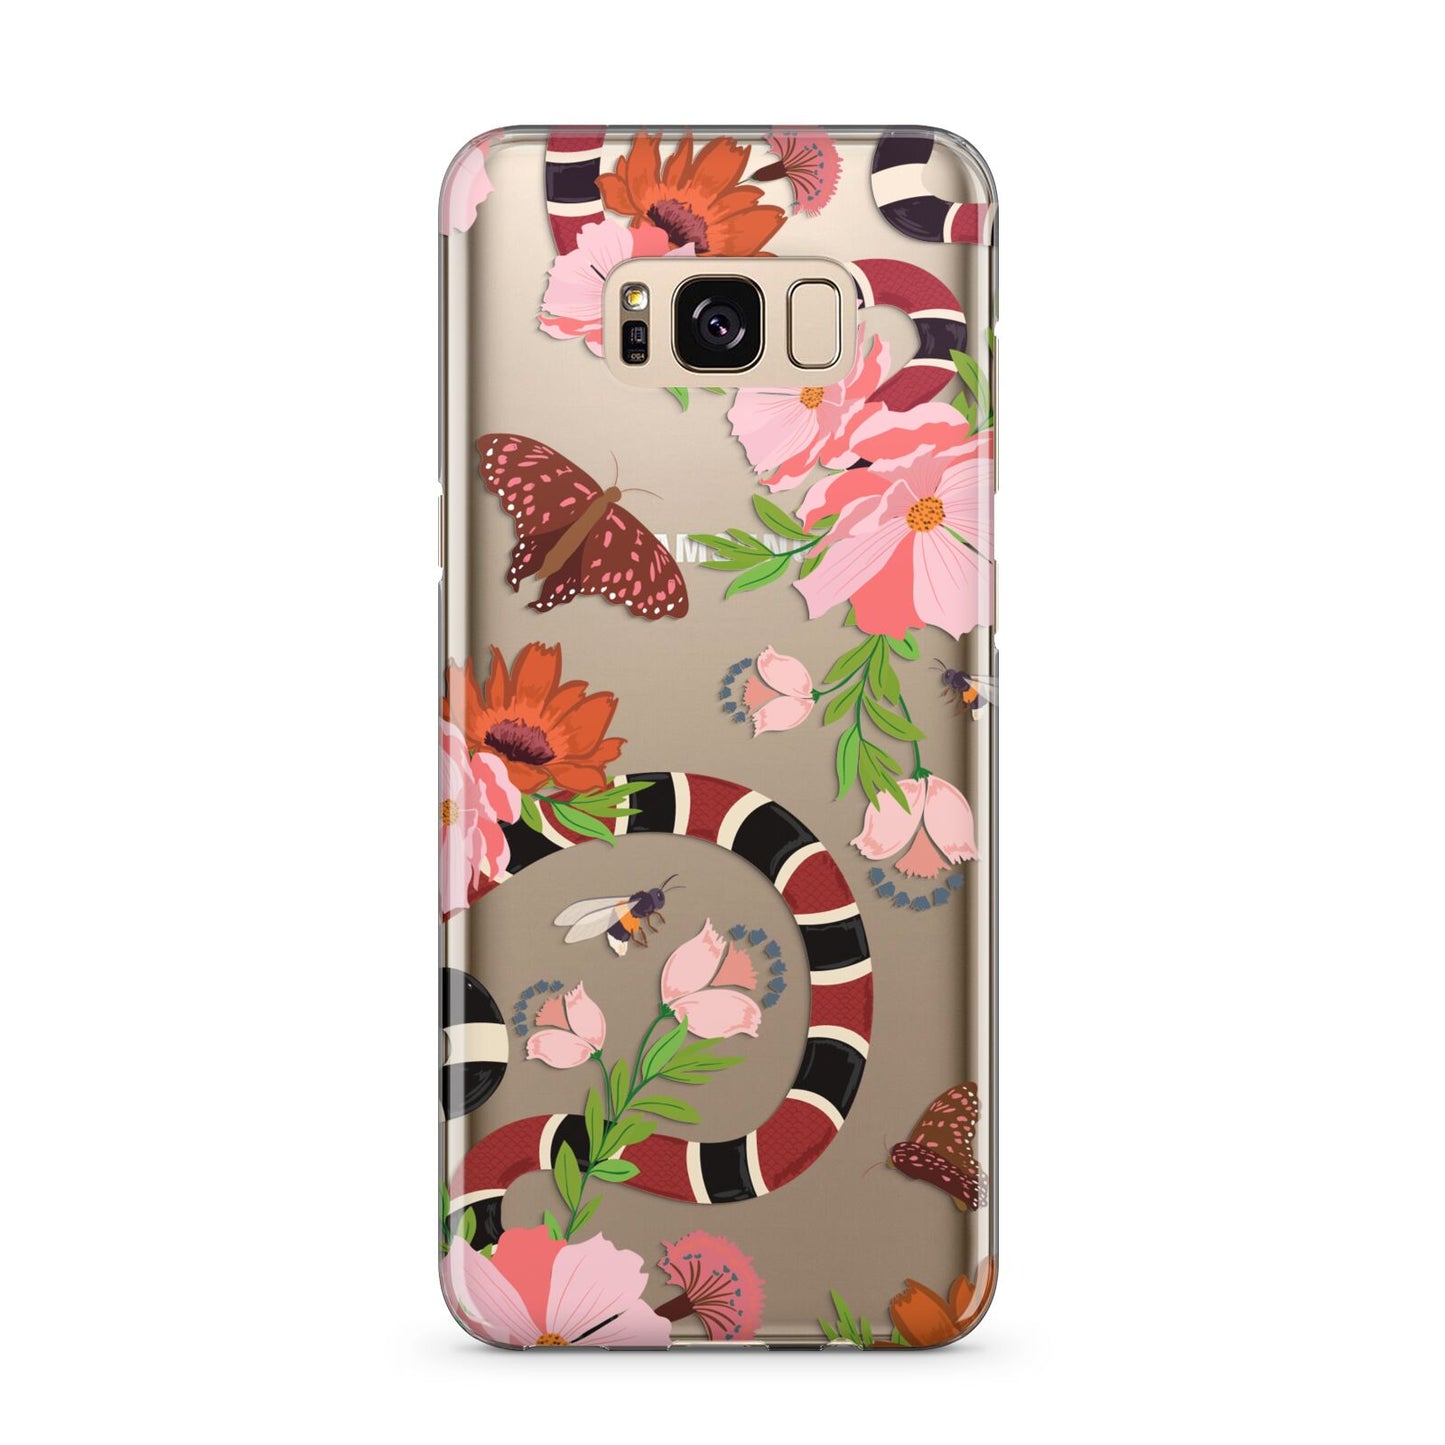 Floral Snake Samsung Galaxy S8 Plus Case